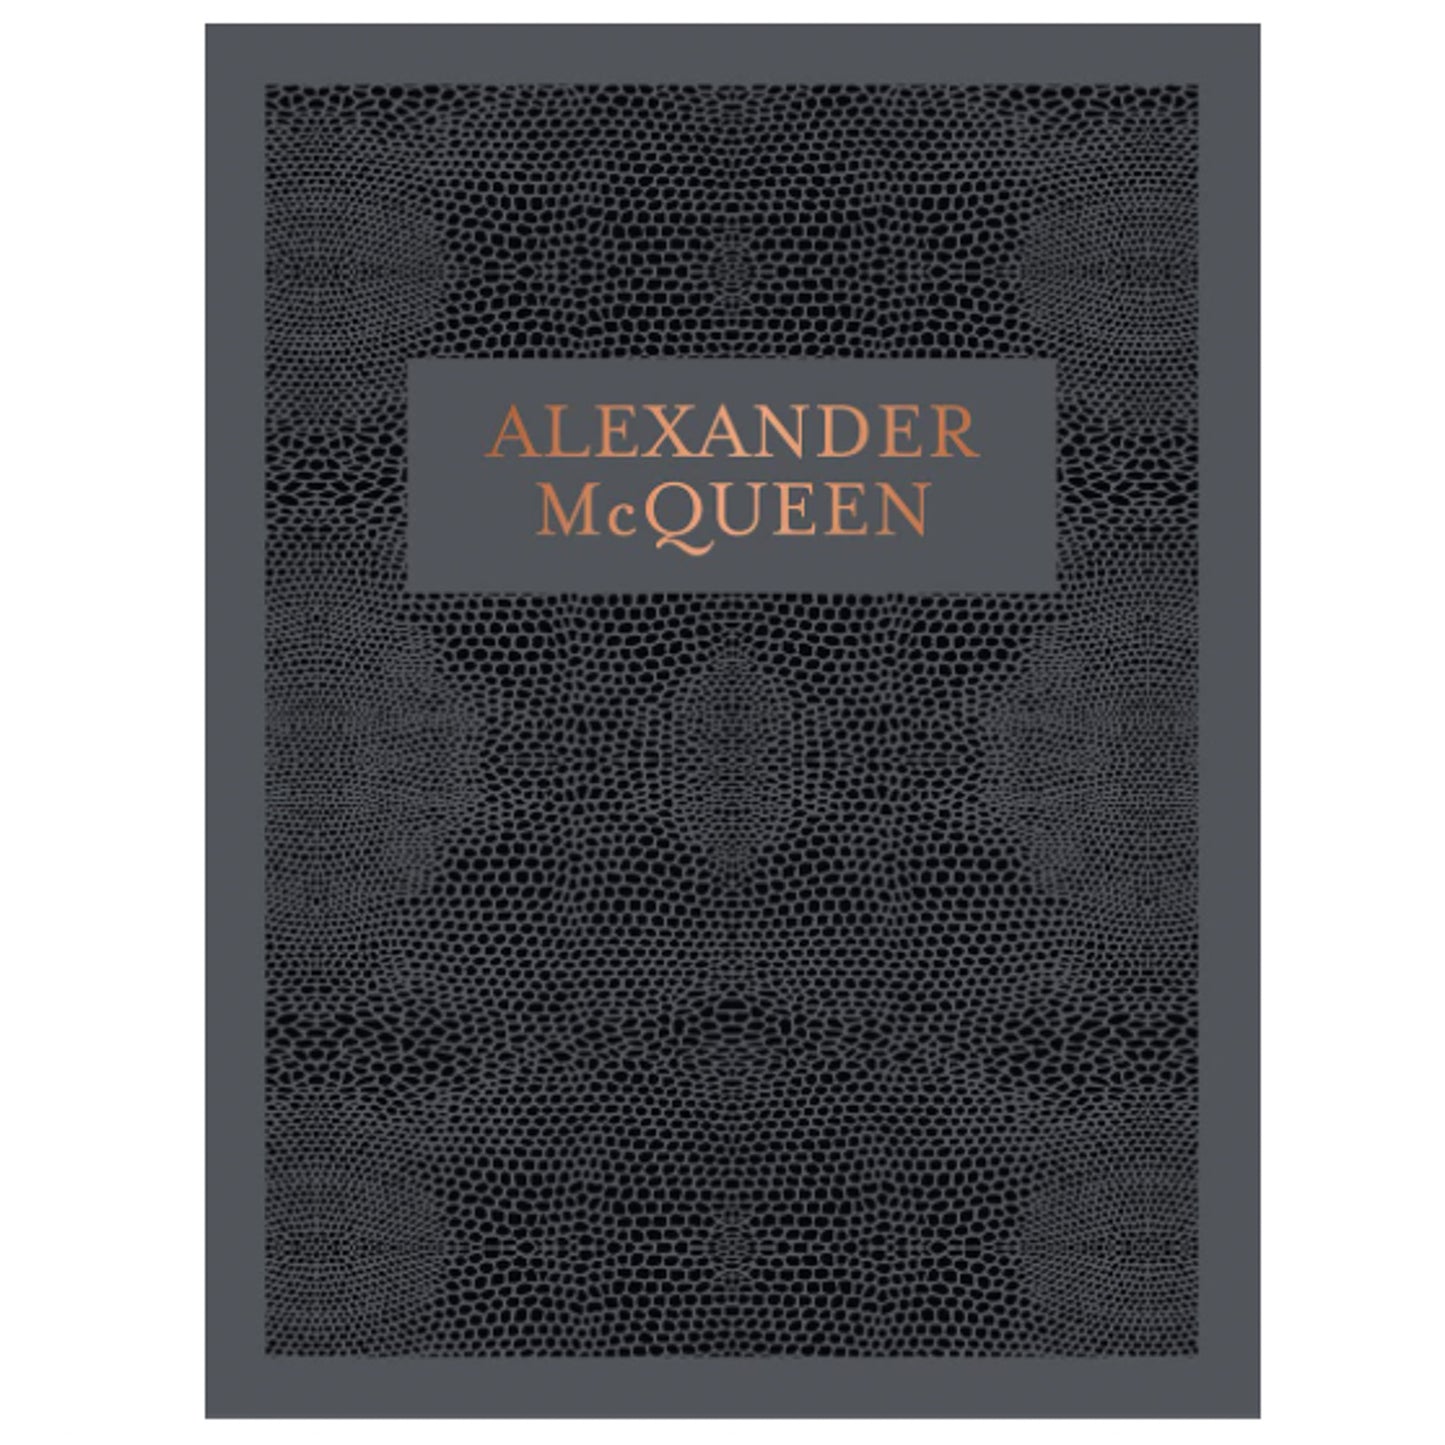 Alexander McQueen Coffee Table Book